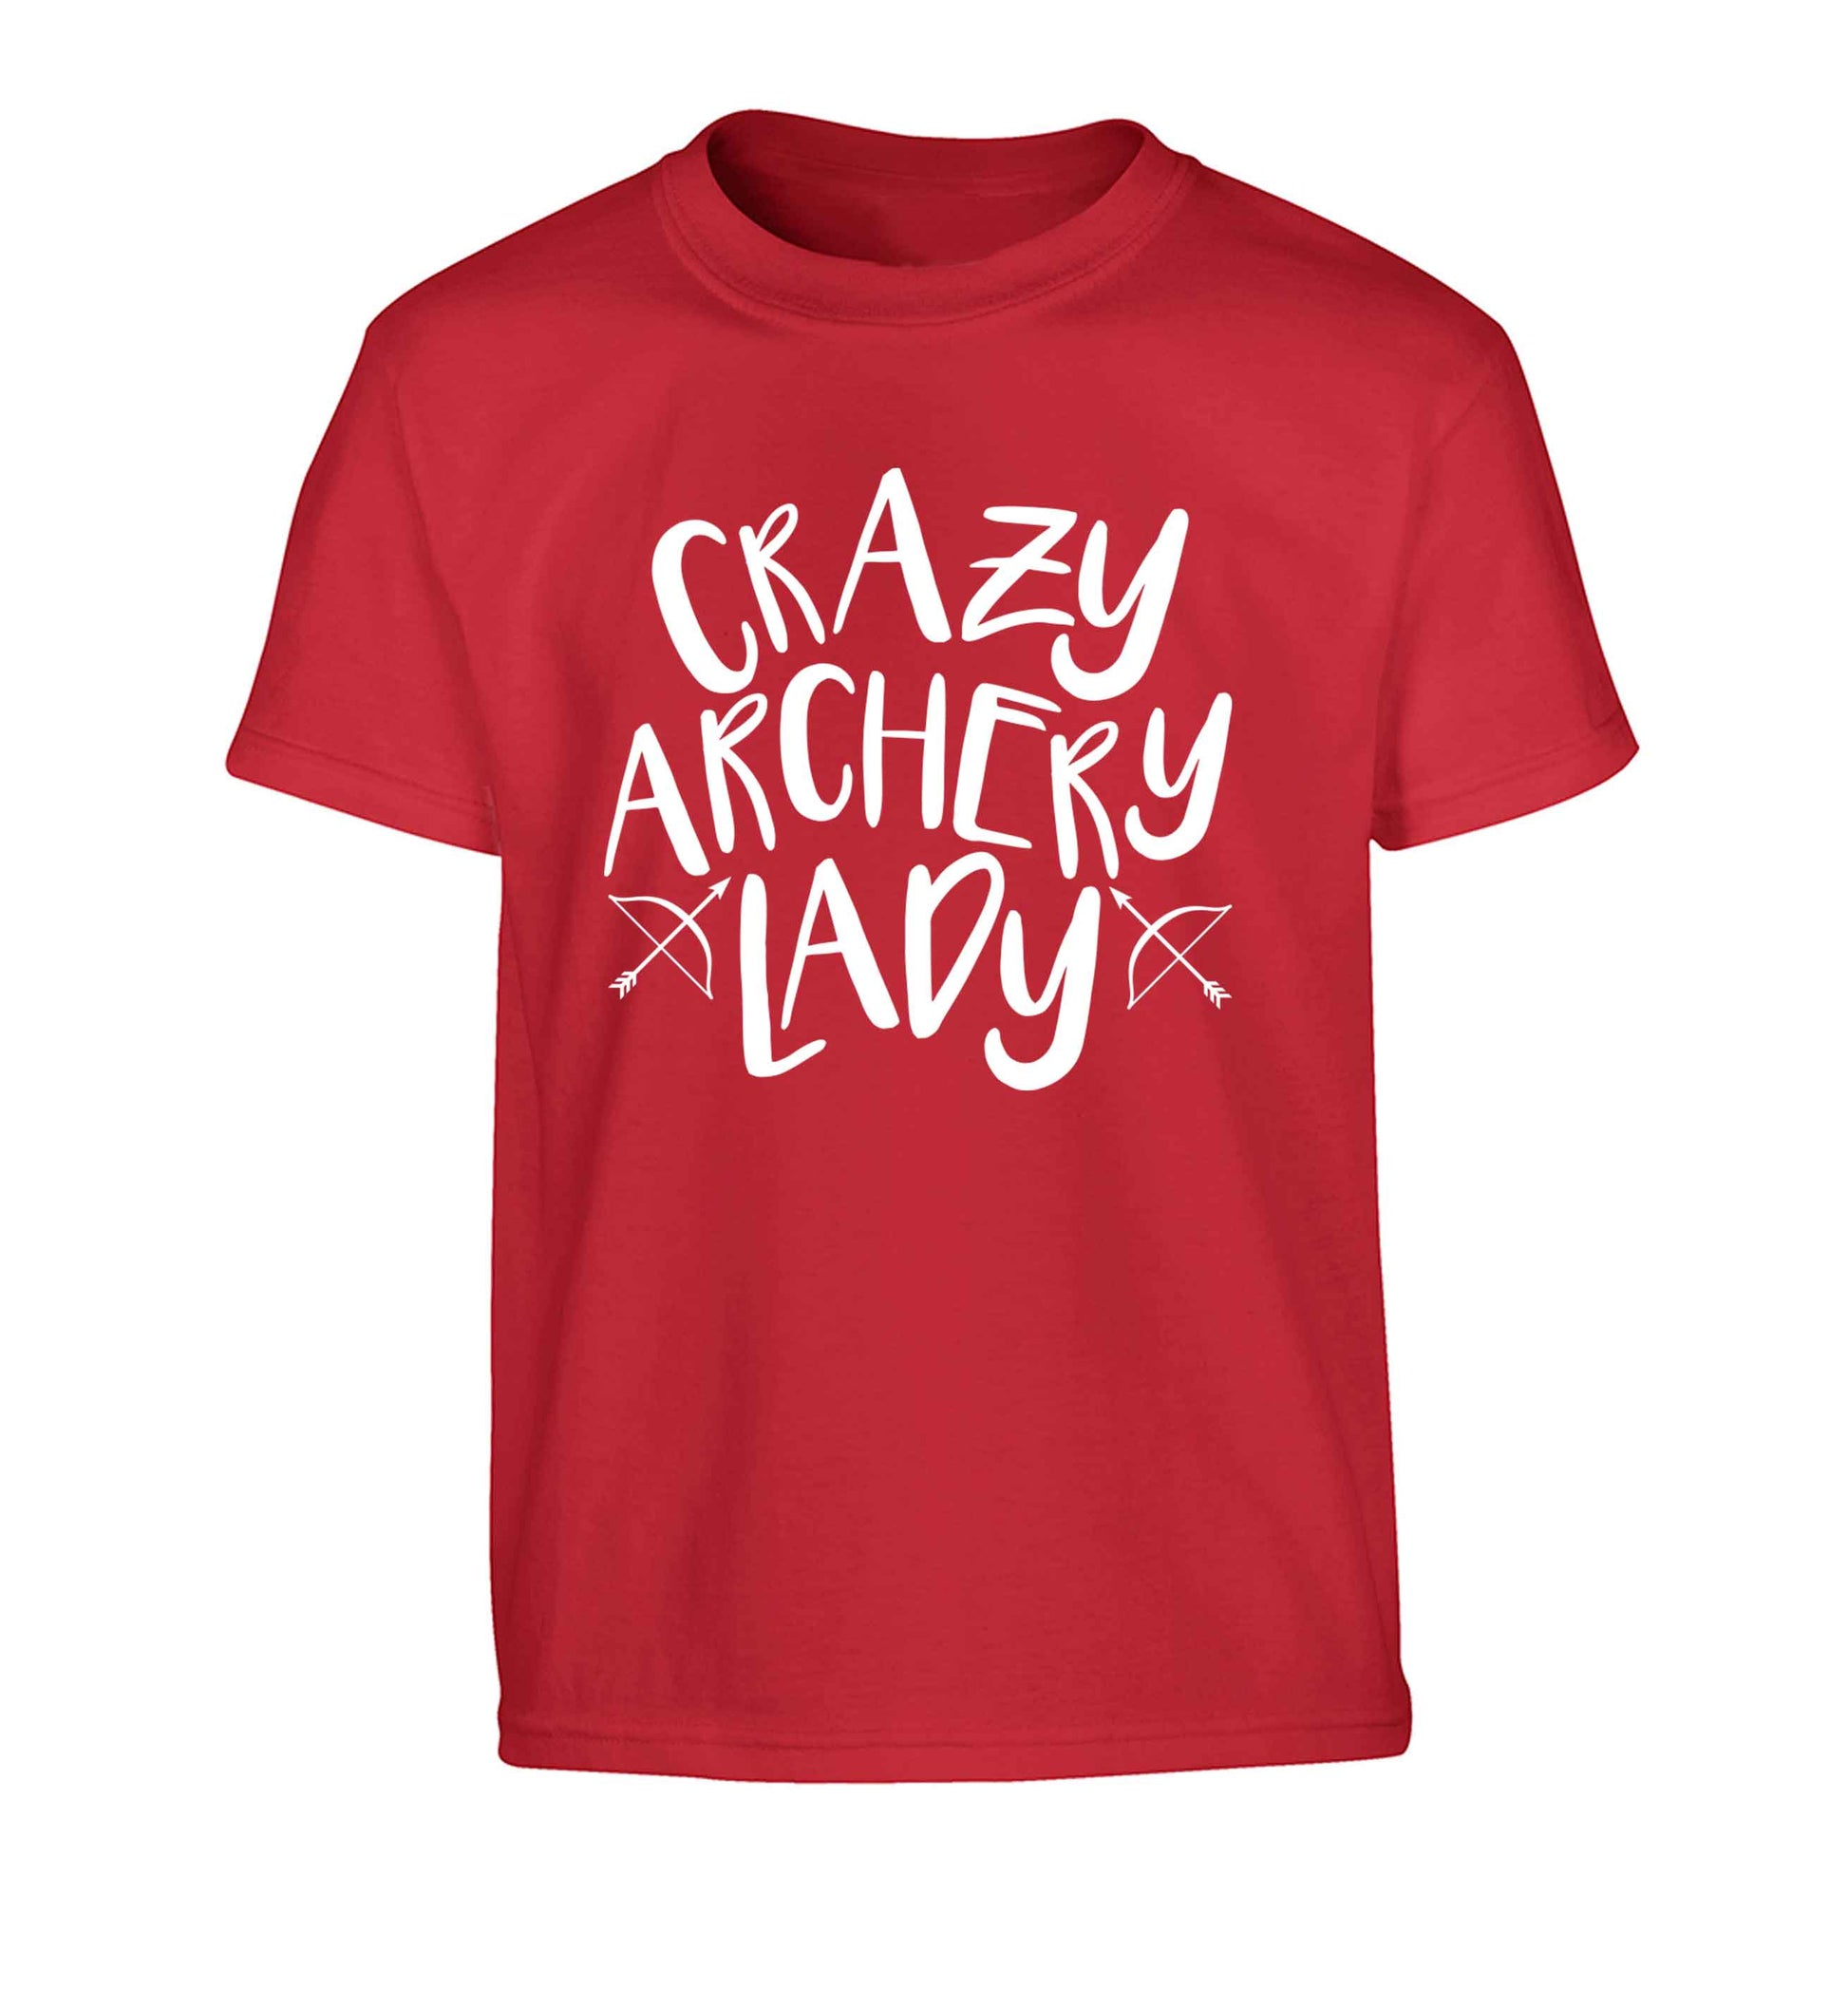 Crazy archery lady Children's red Tshirt 12-13 Years